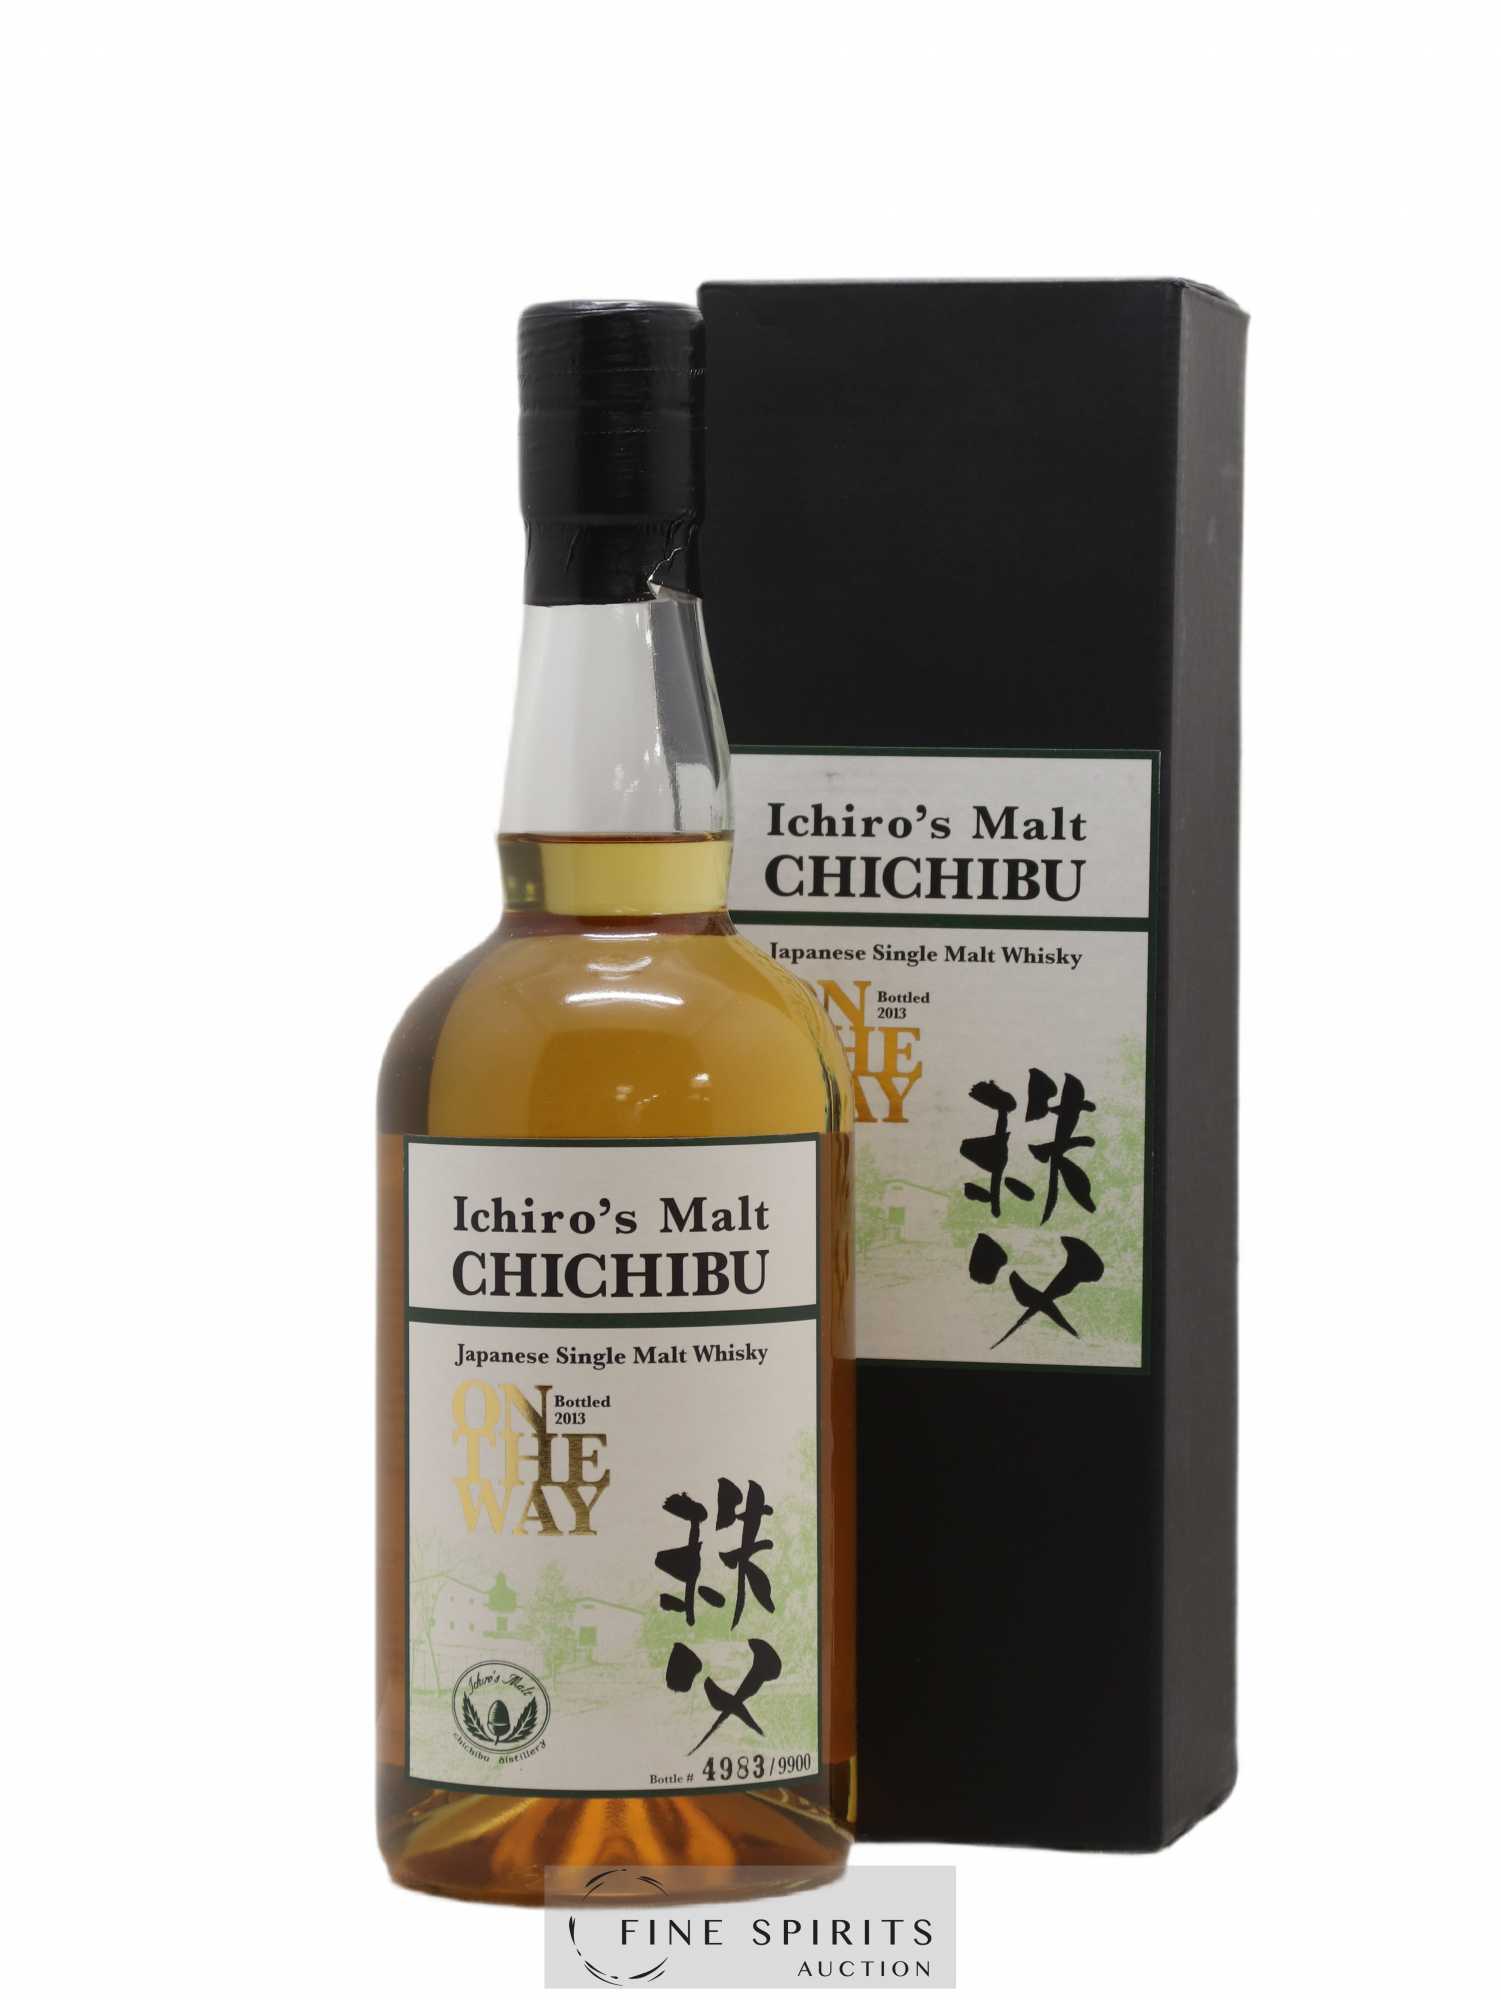 Chichibu Of. On The Way bottled 2013 - One of 9900 Ichiro's Malt 